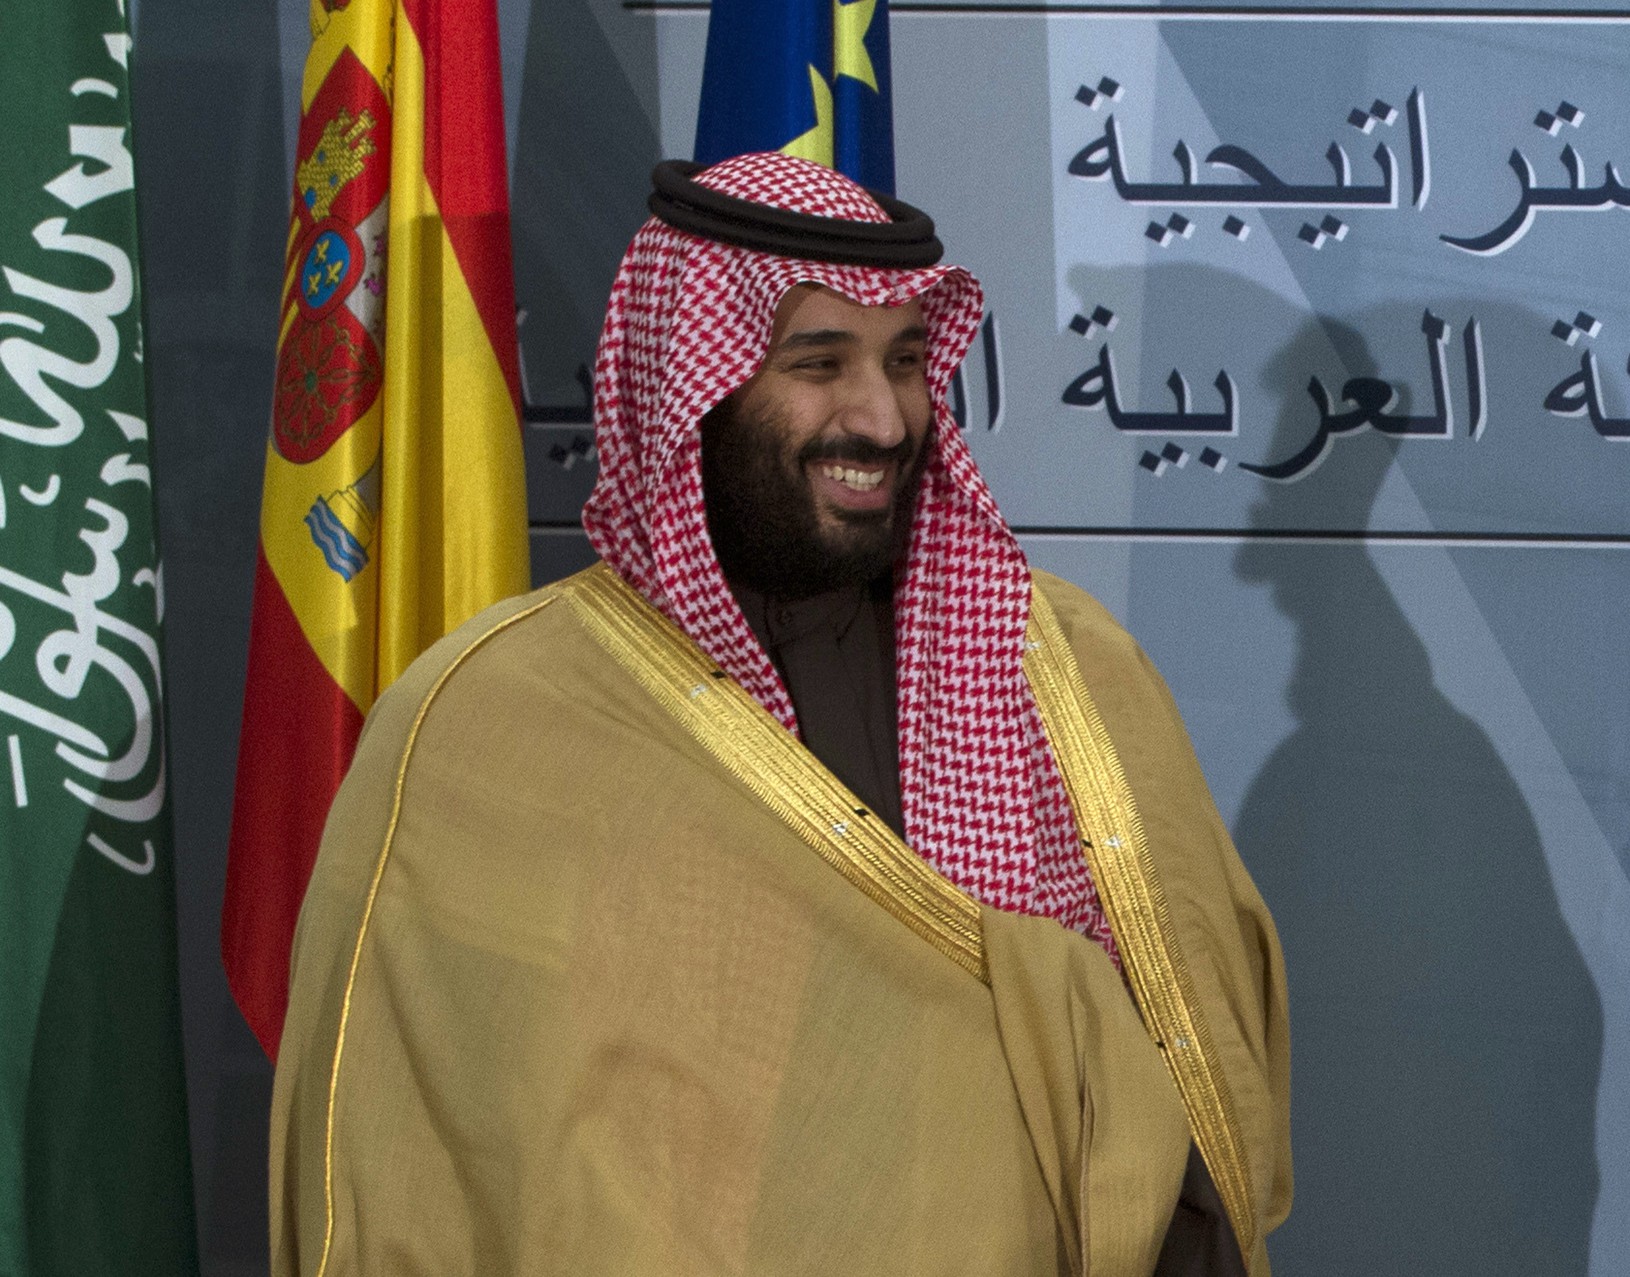 saudskoarabský korunný princ Muhammad